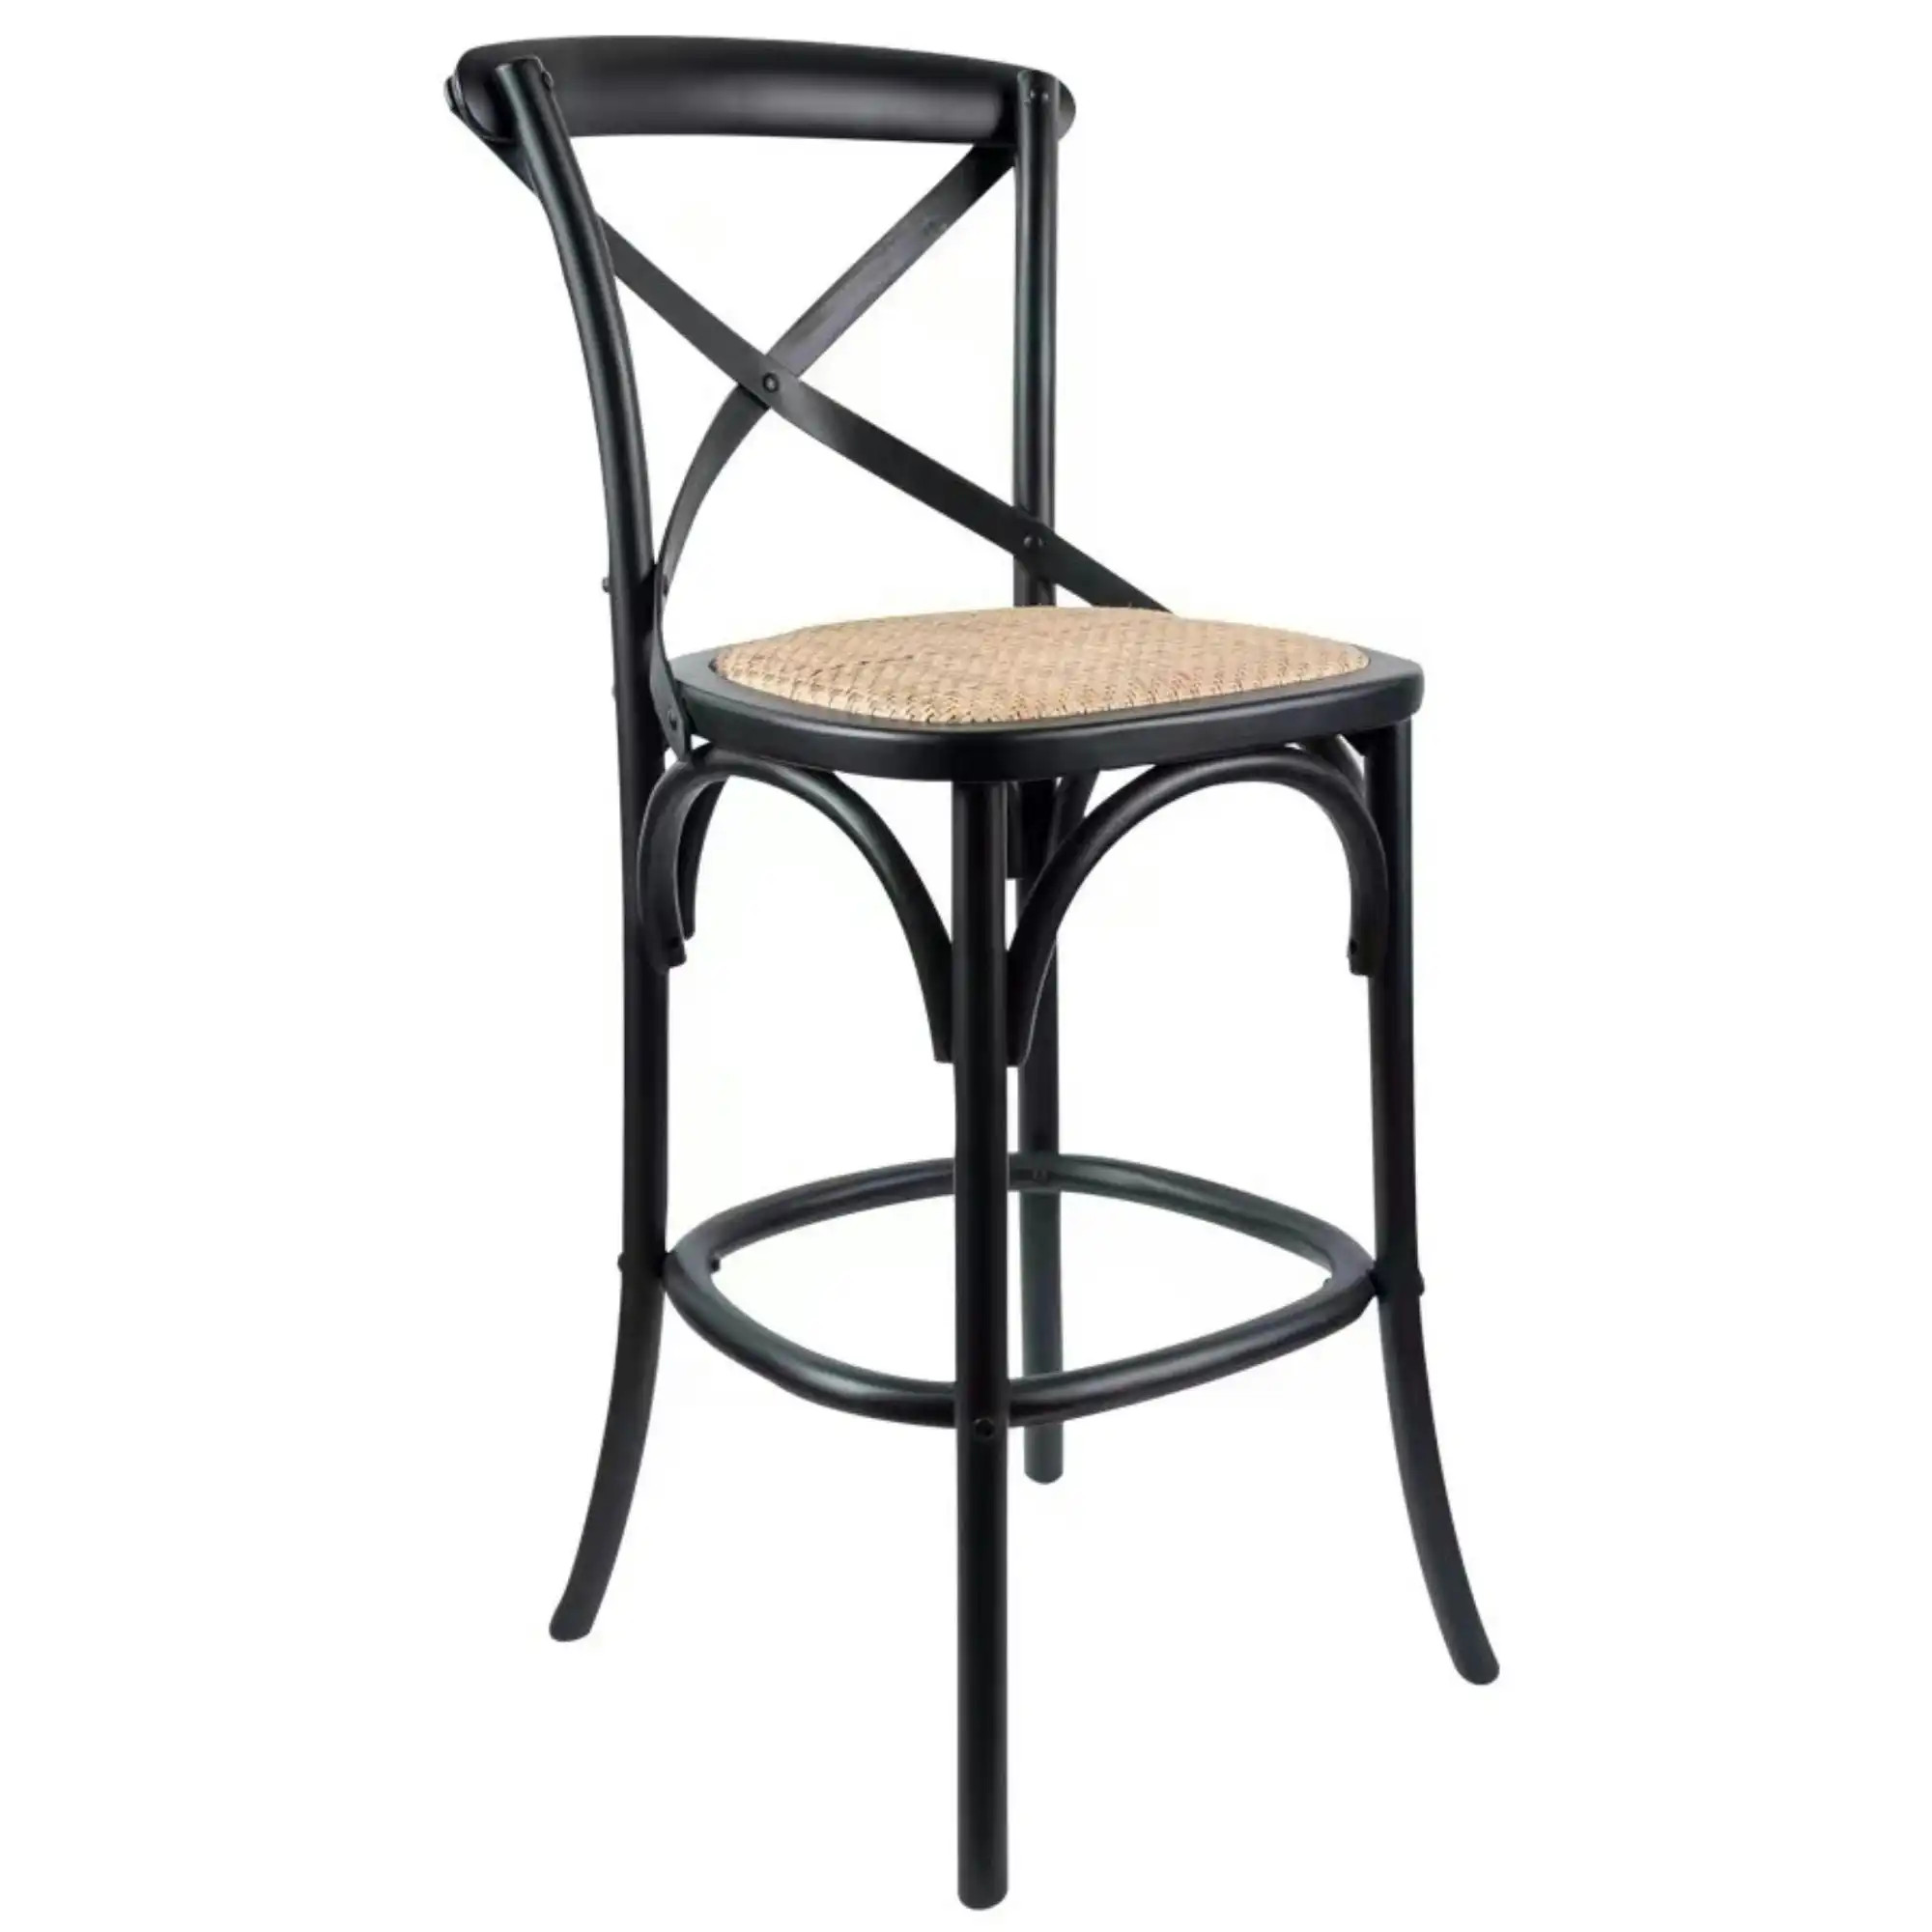 Aster Bar Stools Chair Black